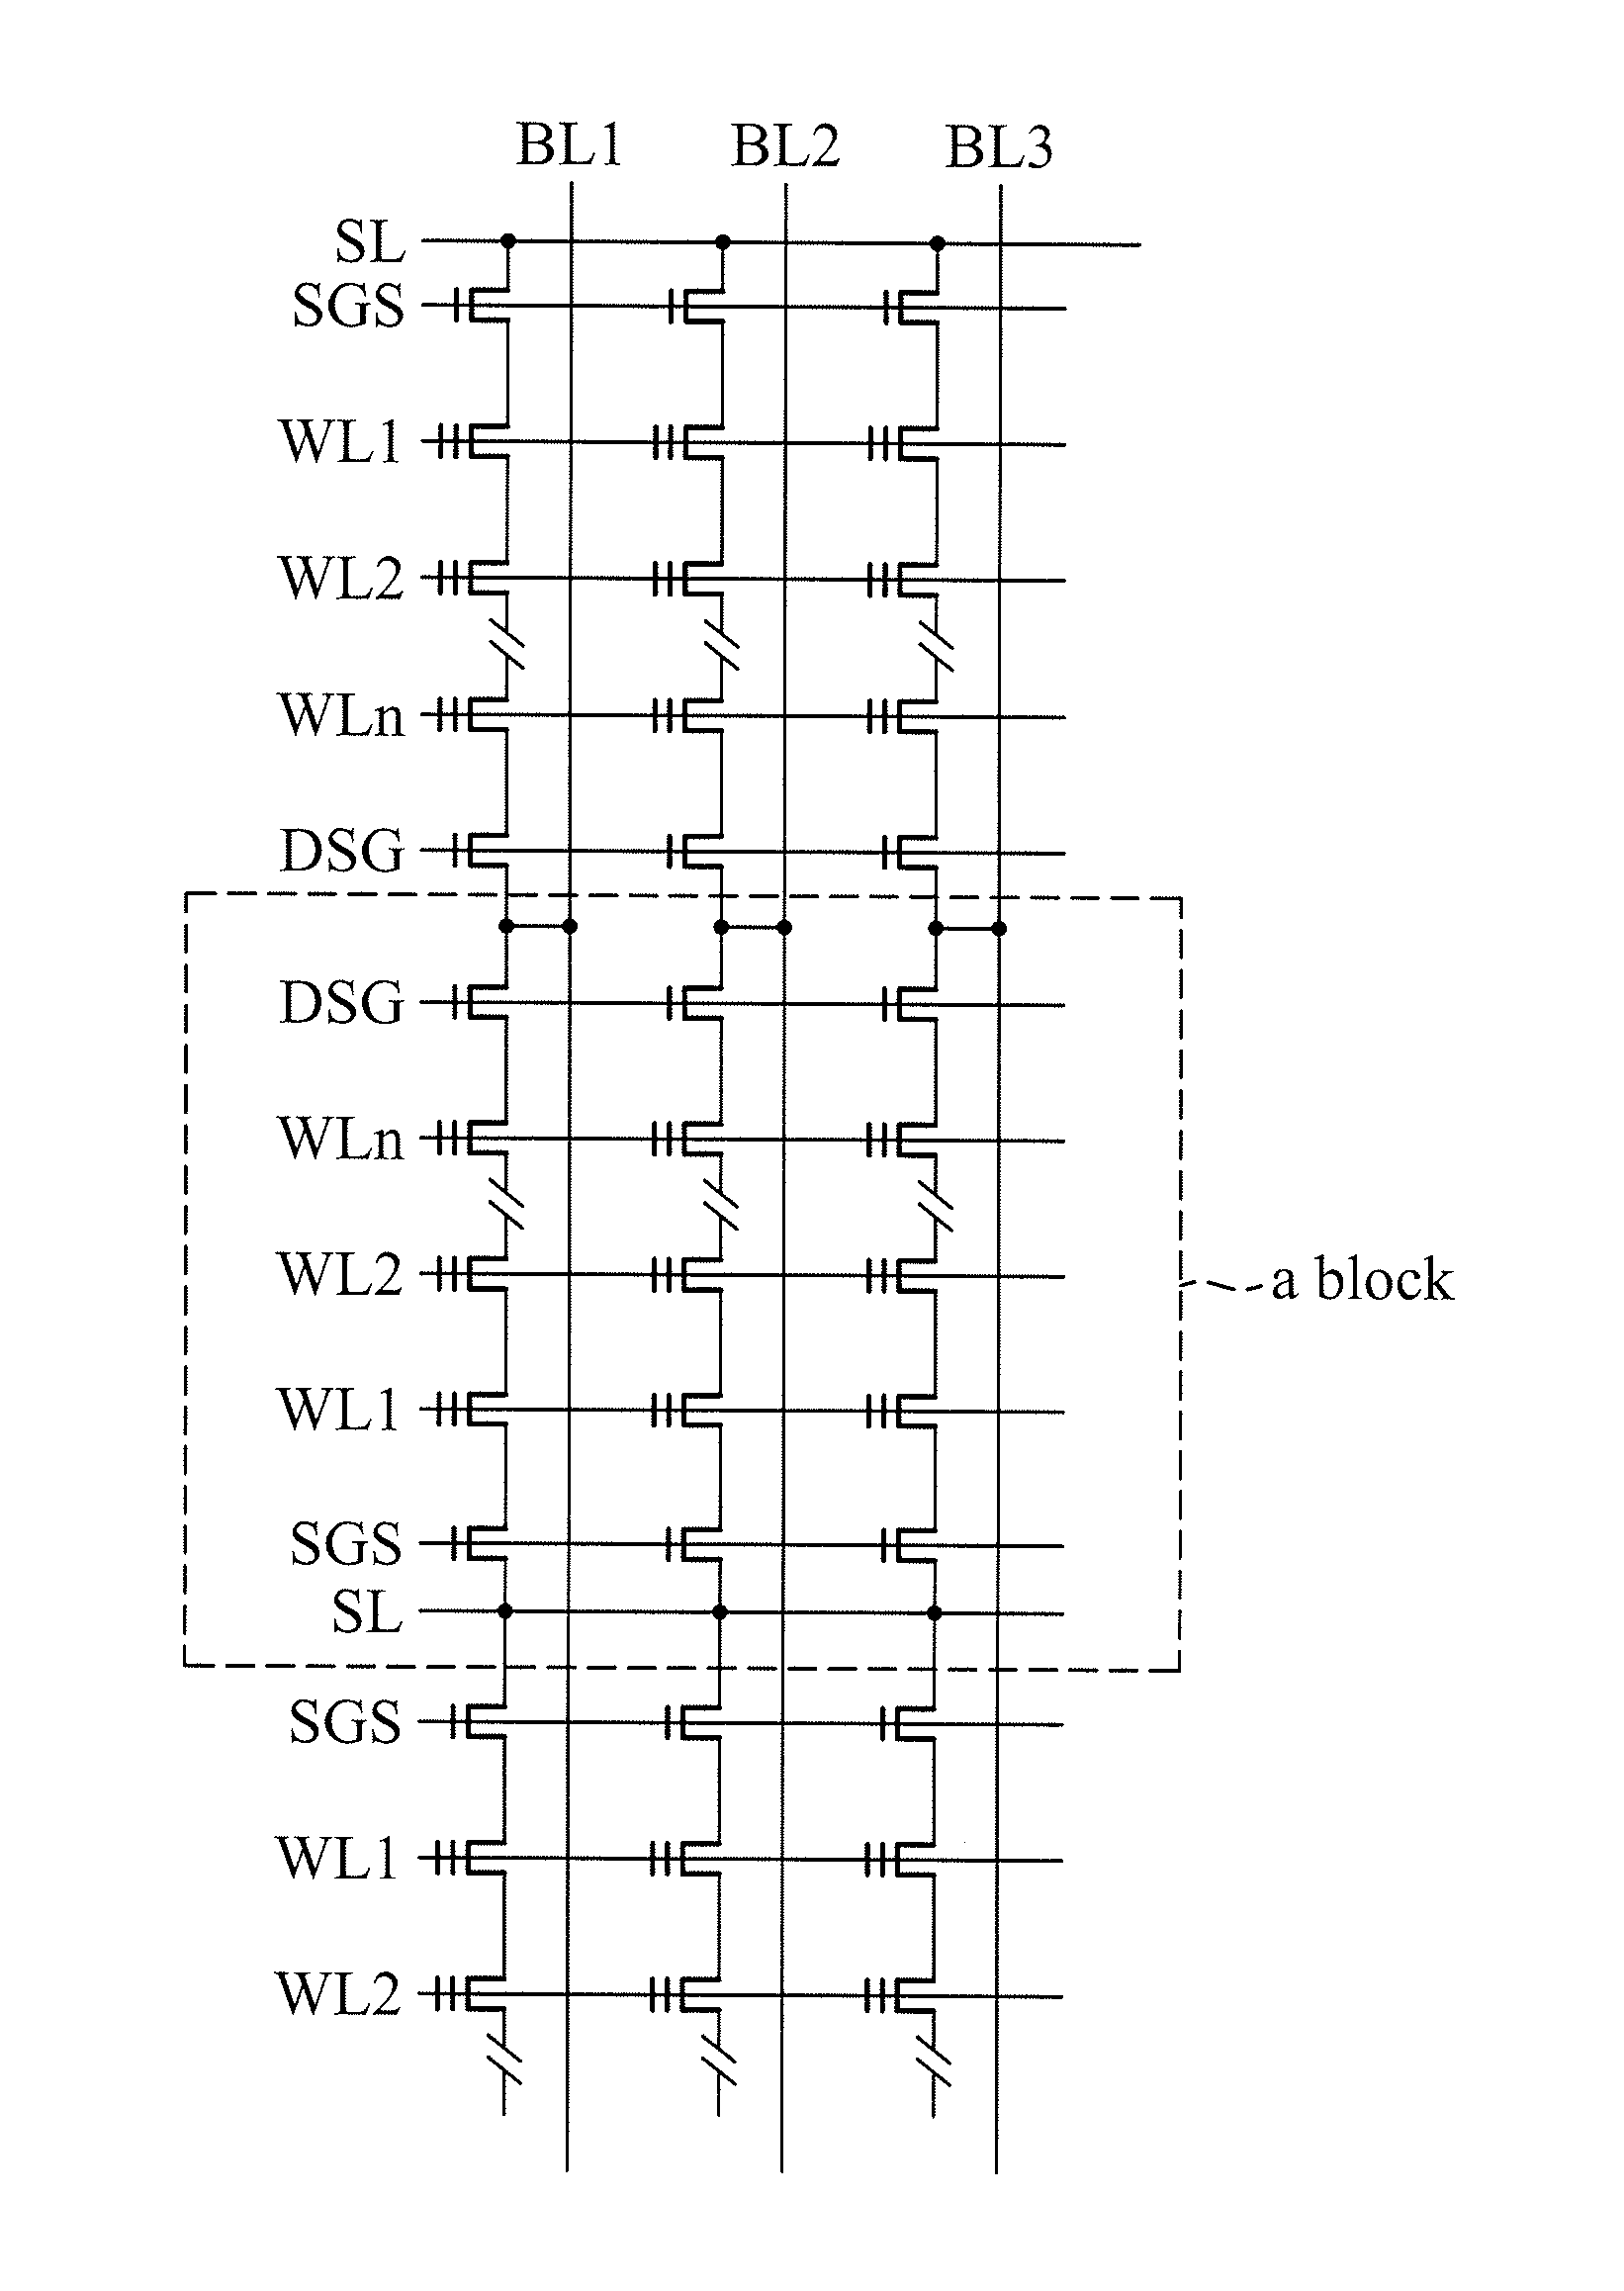 Programming method for NAND-type flash memory